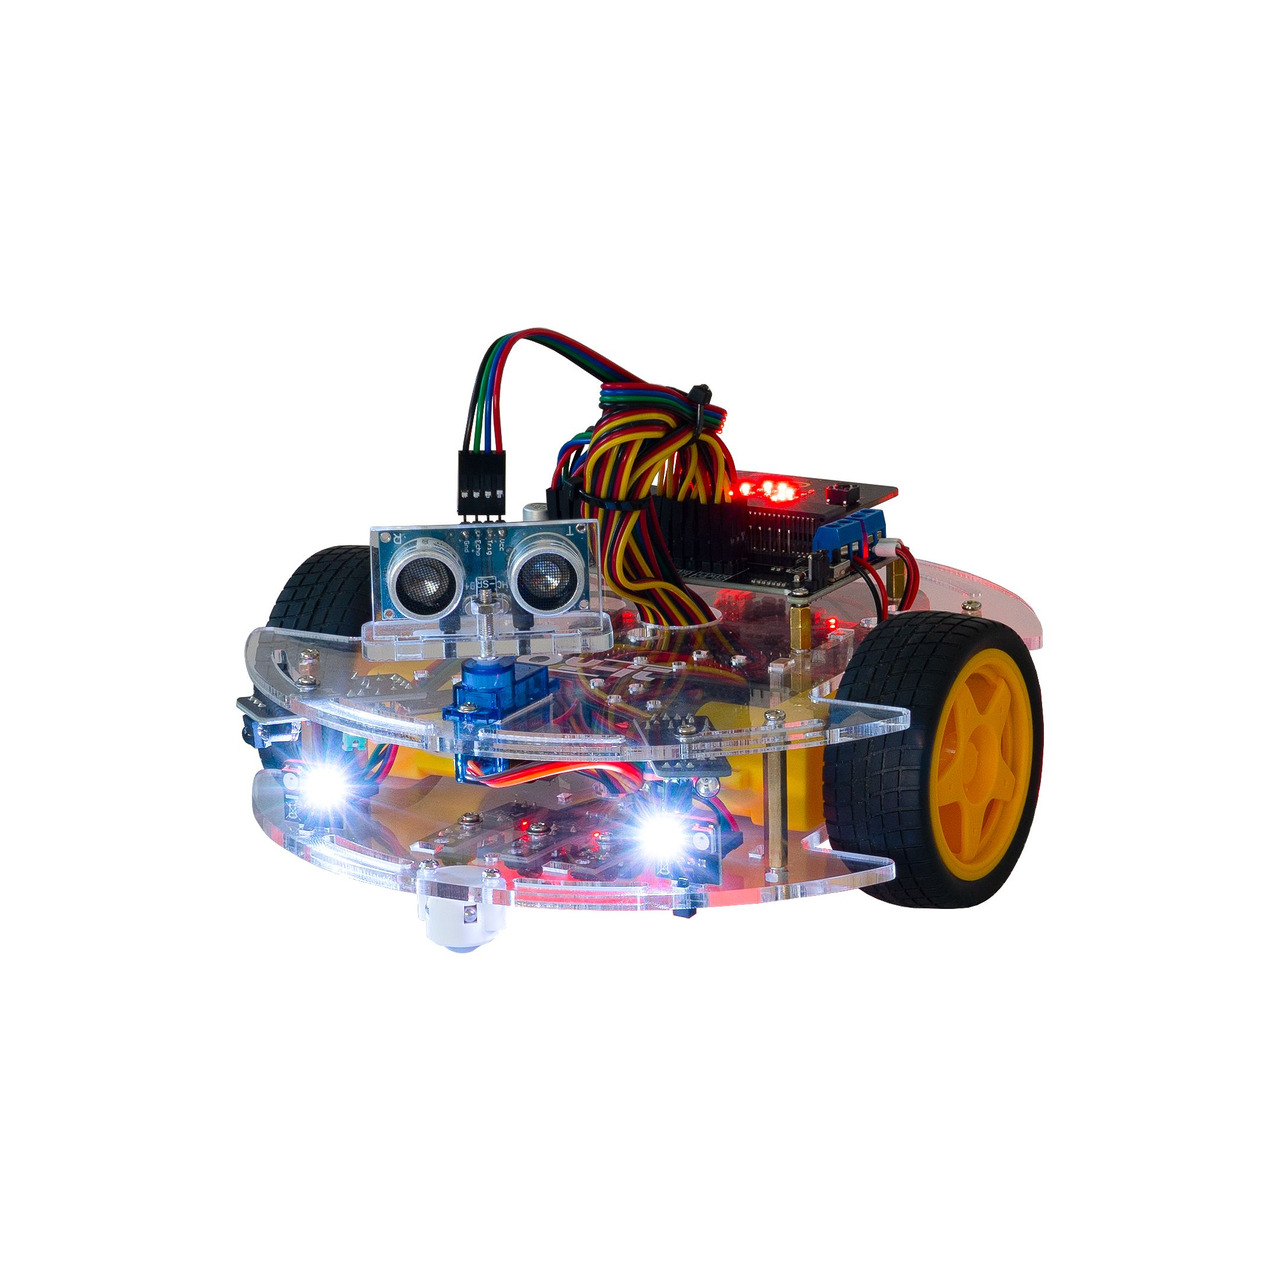 Joy-IT programmierbares Roboterauto Joy-Car inkl-  micro:bit v2 und beweglichem Ultraschallsensor unter Baustze